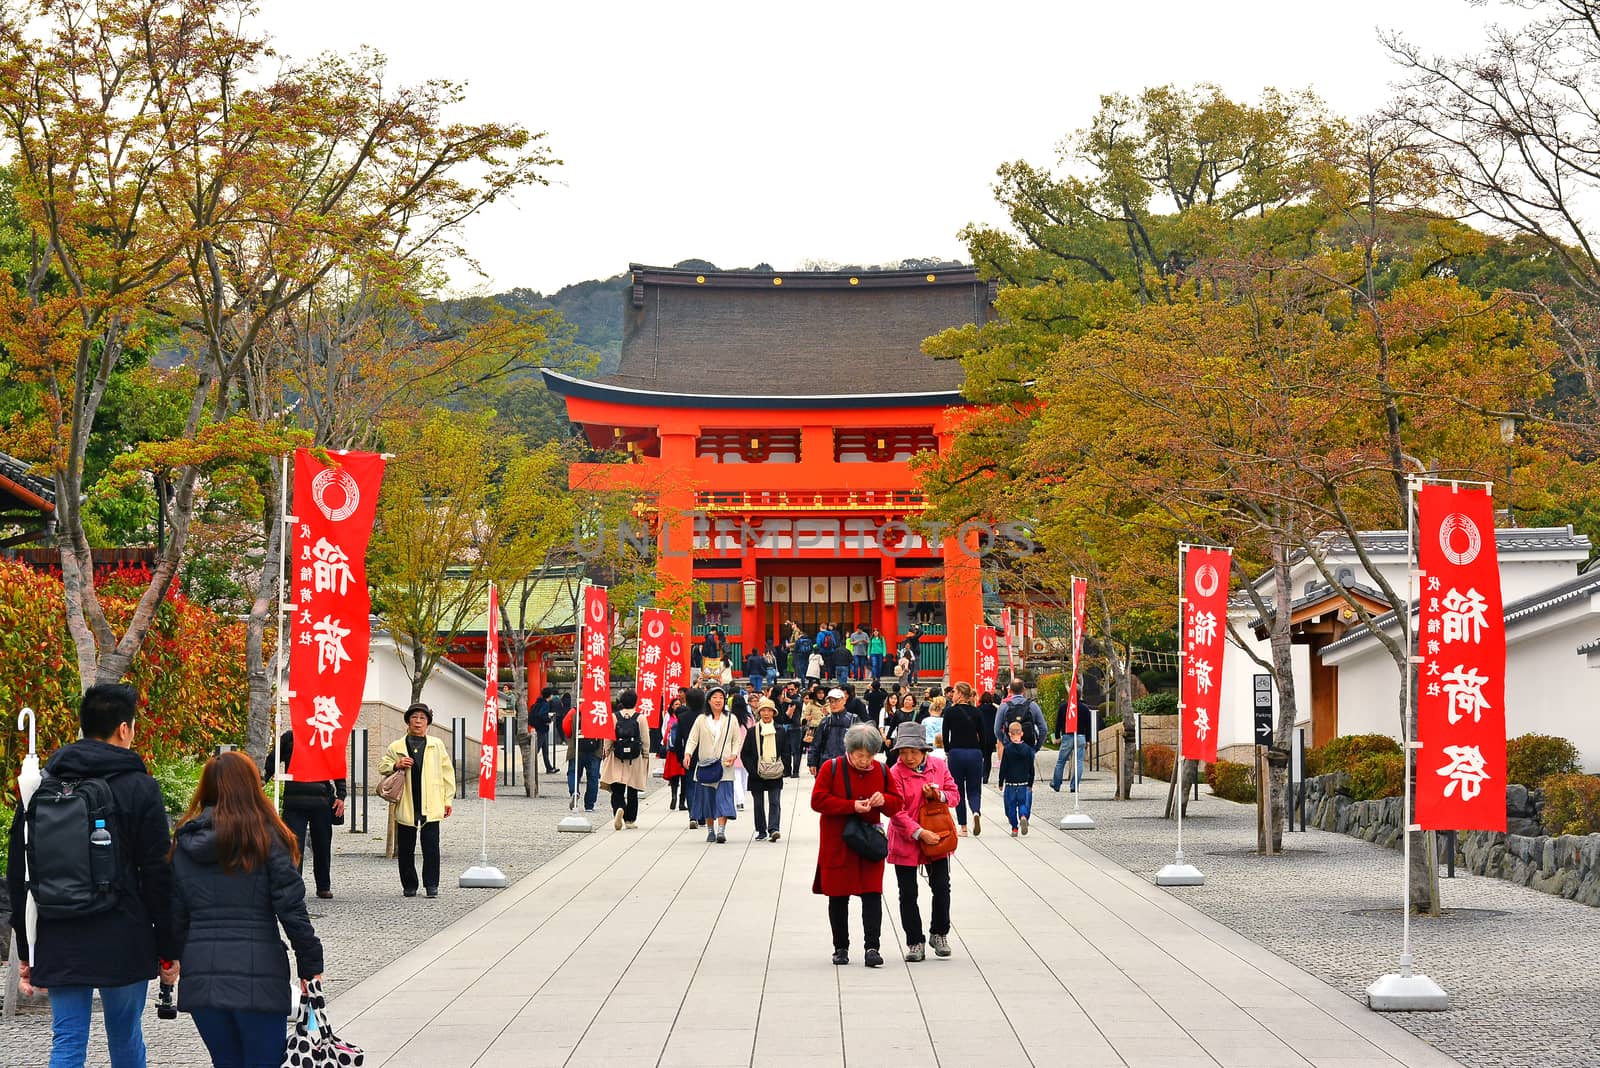 KYOTO, JP - APRIL 10 - Fushimi Inari Taisha entrance on April 10, 2017 in Kyoto, Japan. Fushimi Inari was dedicated to the gods of rice and sake by the Hata family in the 8th century.